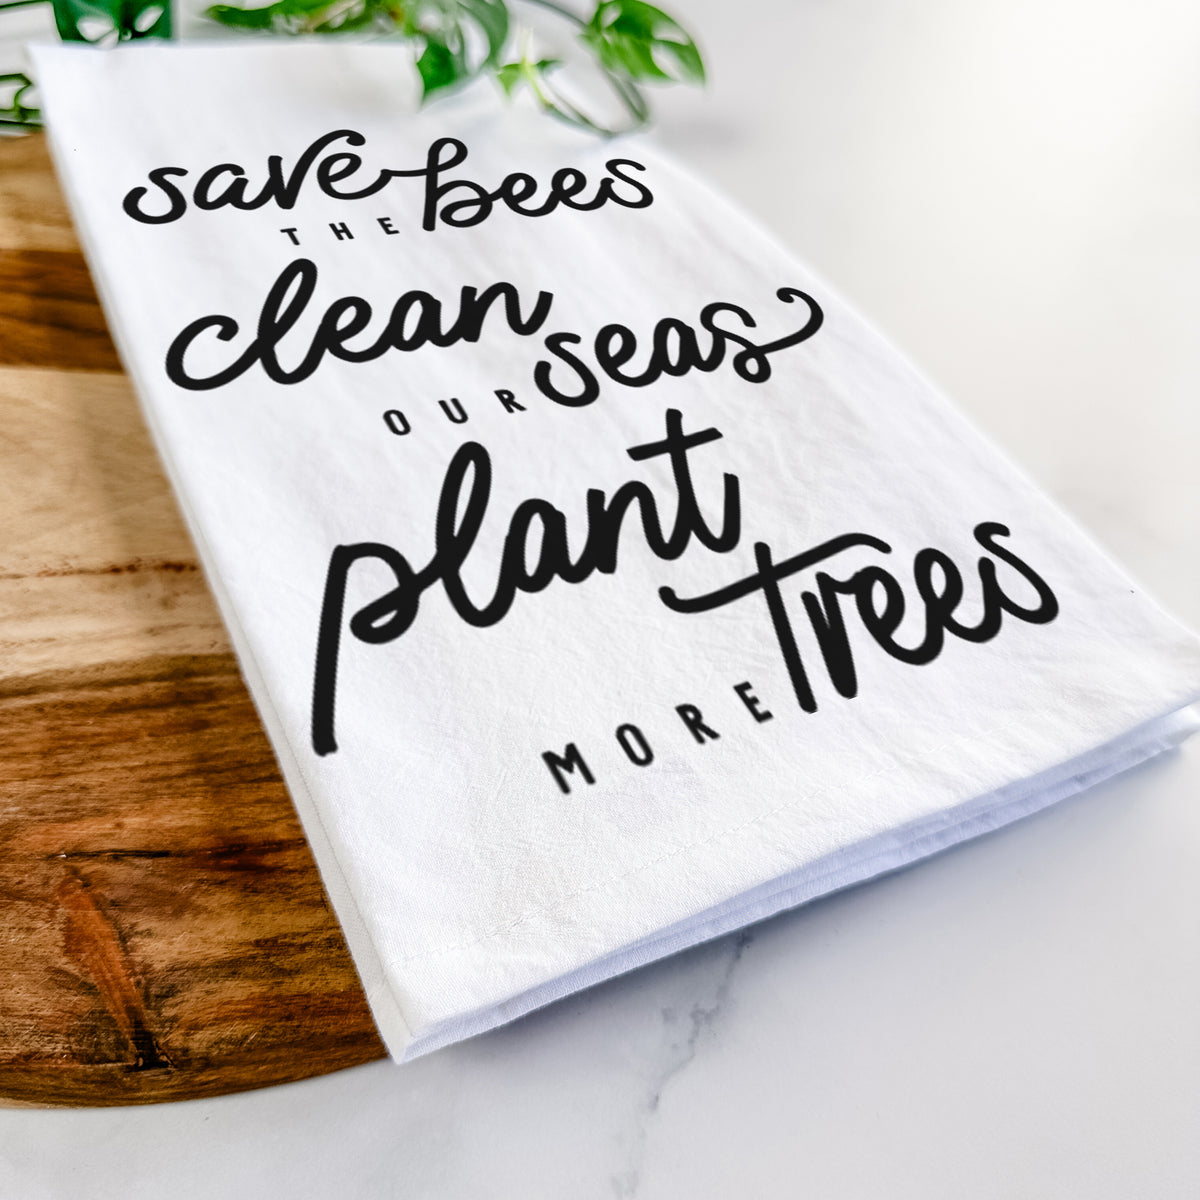 Bees Seas Trees - Typography Tea Towel